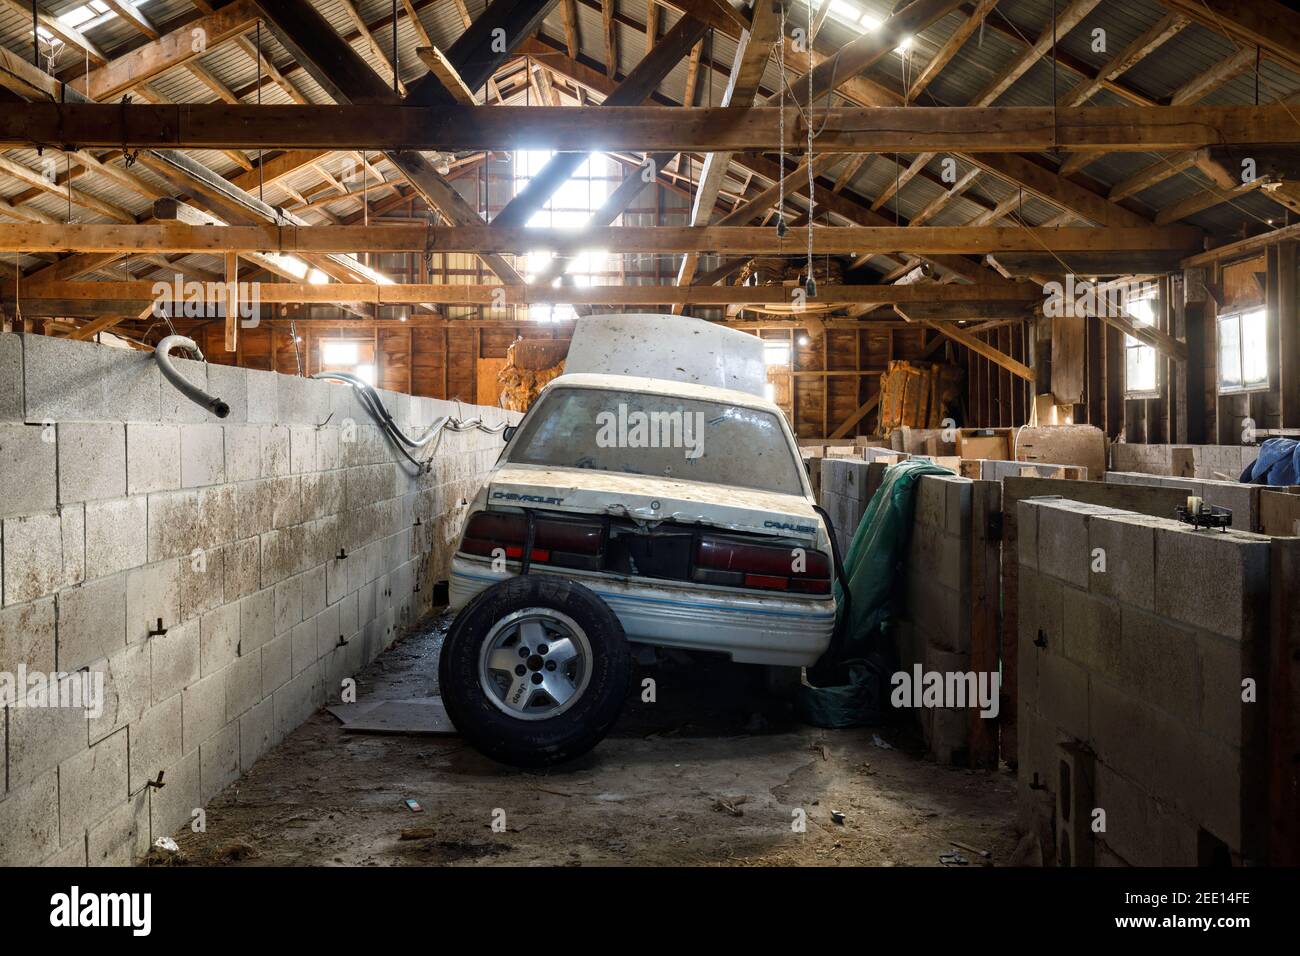 A 1980s Chevrolet Cavalier inside an abandoned barn. Ontario, Canada. Stock Photo